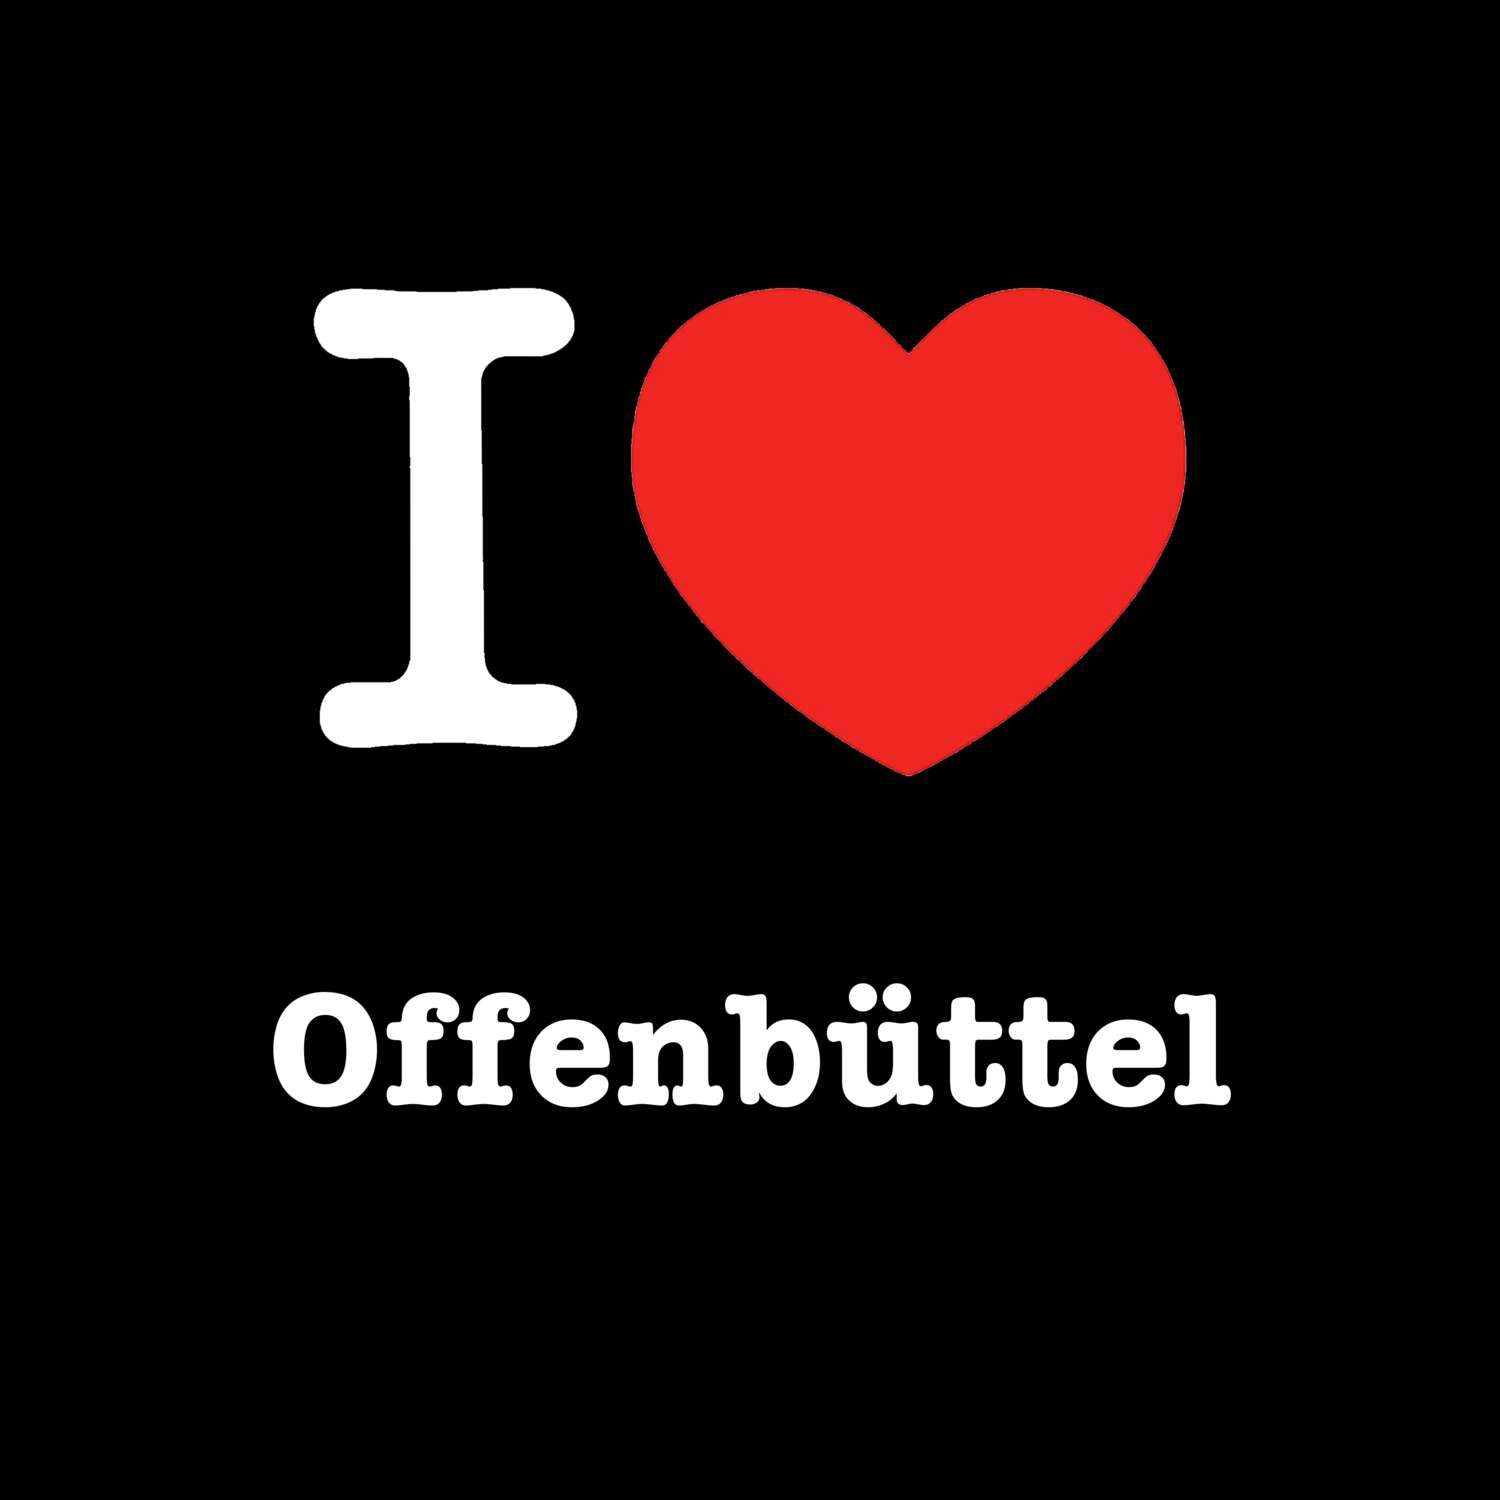 Offenbüttel T-Shirt »I love«